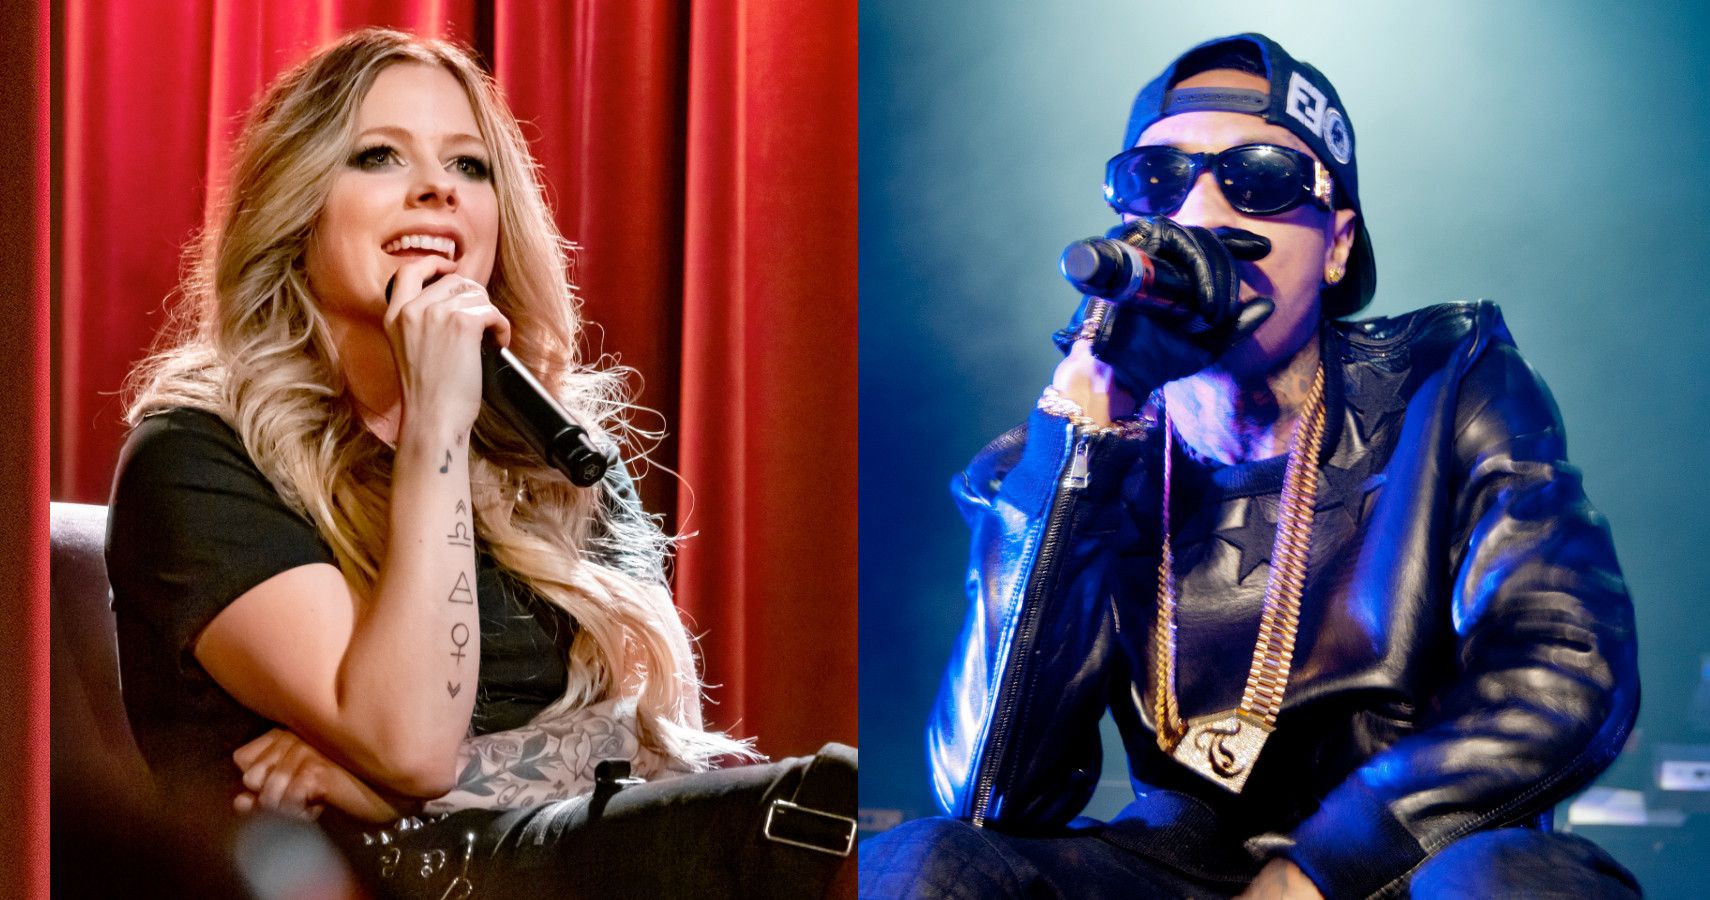 Tyga Gifts $80,000 Diamond Chain To Girlfriend Avril Lavigne